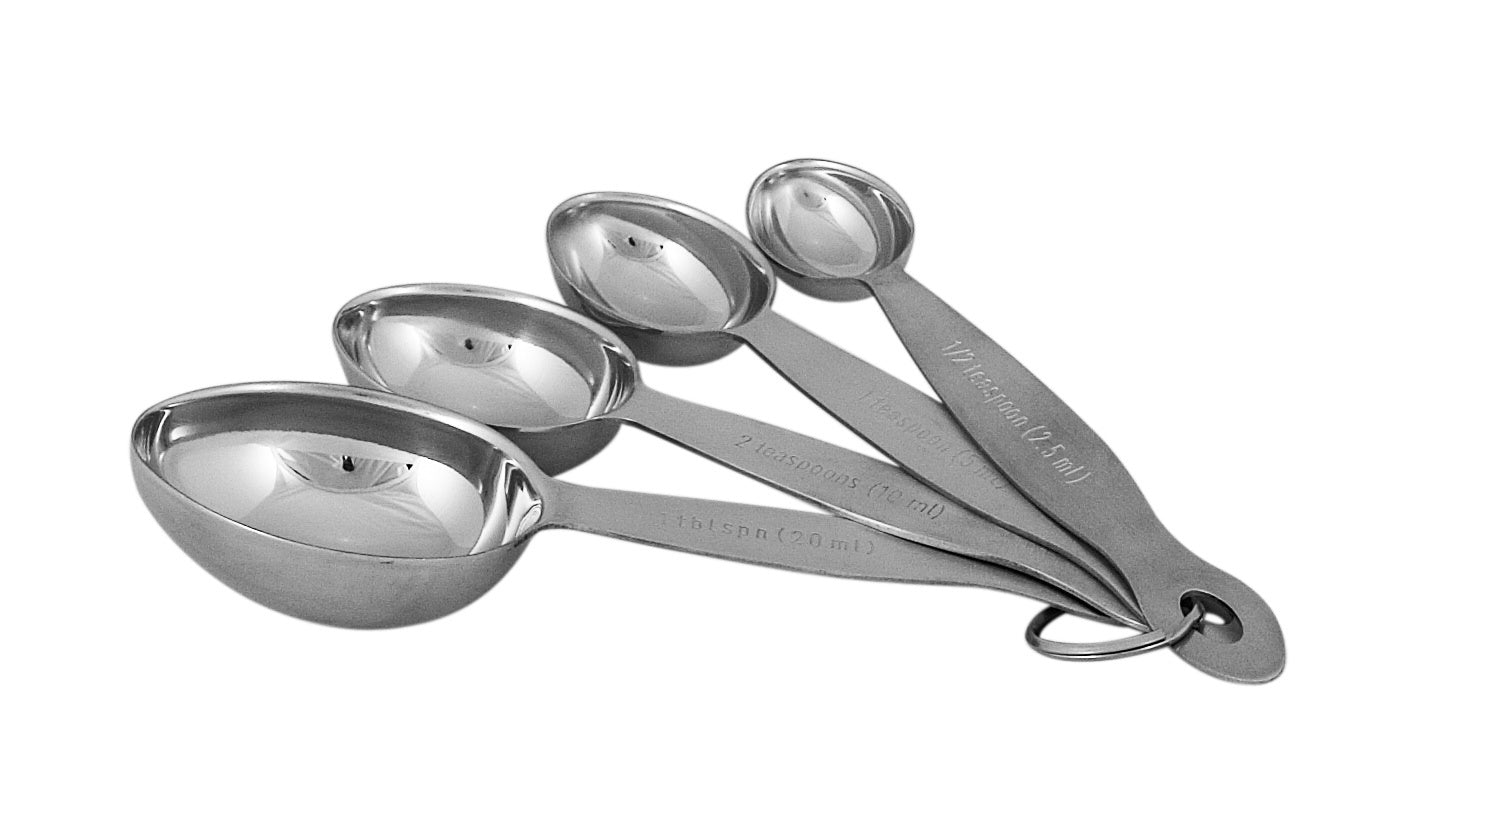 Mondo Australian Standard Measuring Spoons - 4 Piece